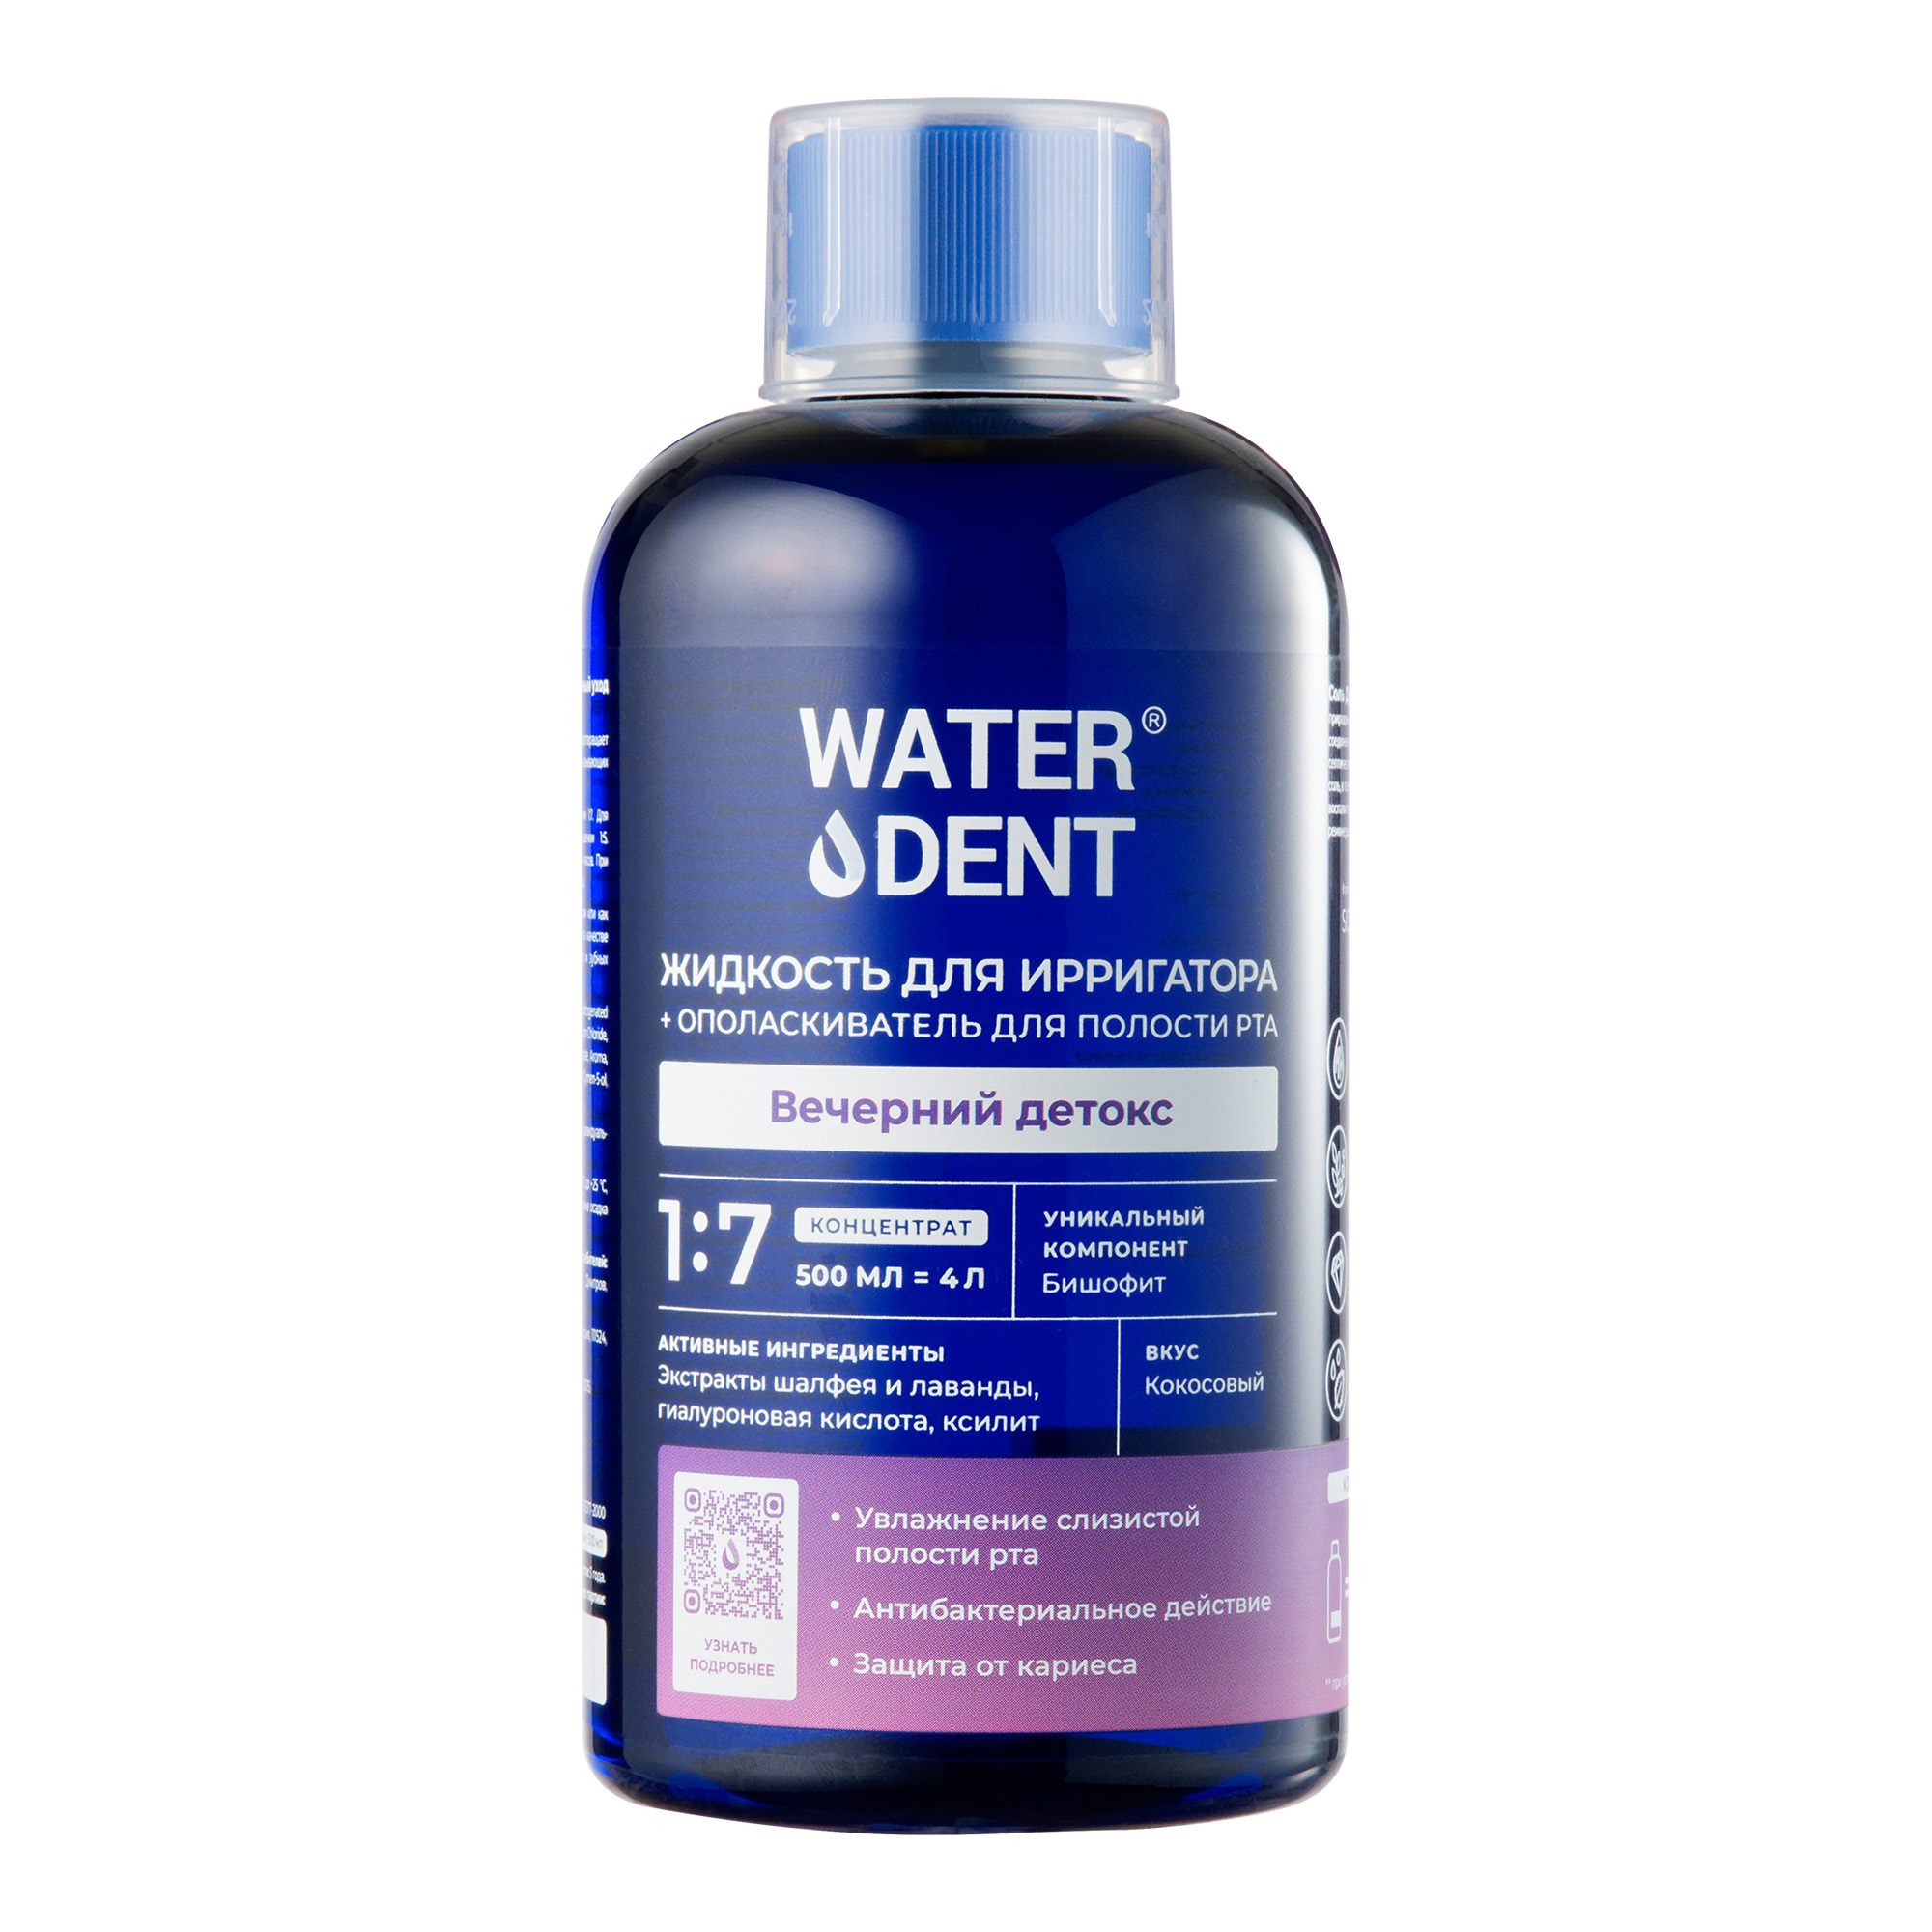 Waterdent, жидкость для ирригатора Вечерний детокс Кокос, флакон 500 мл